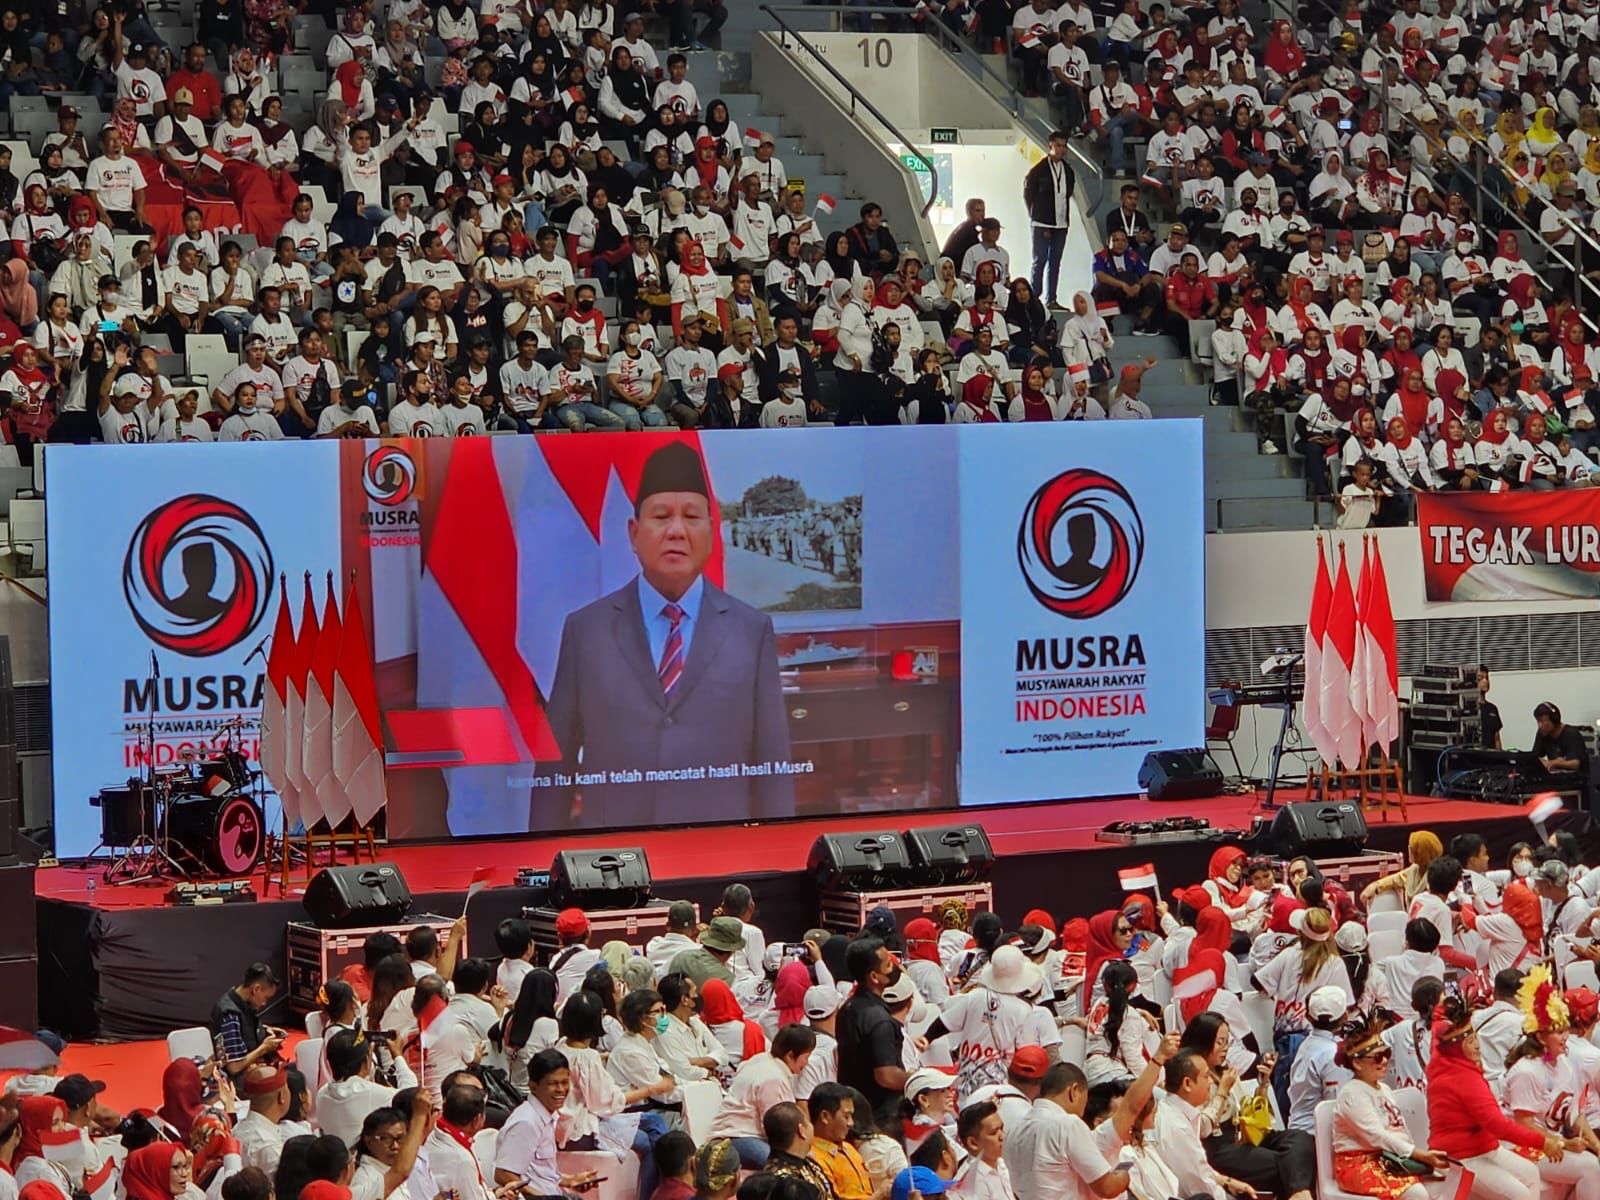 Foto Prabowo muncul di videotron dalam acara Musra bersama Presiden Jokowi (Sinpo.id/Youtube)